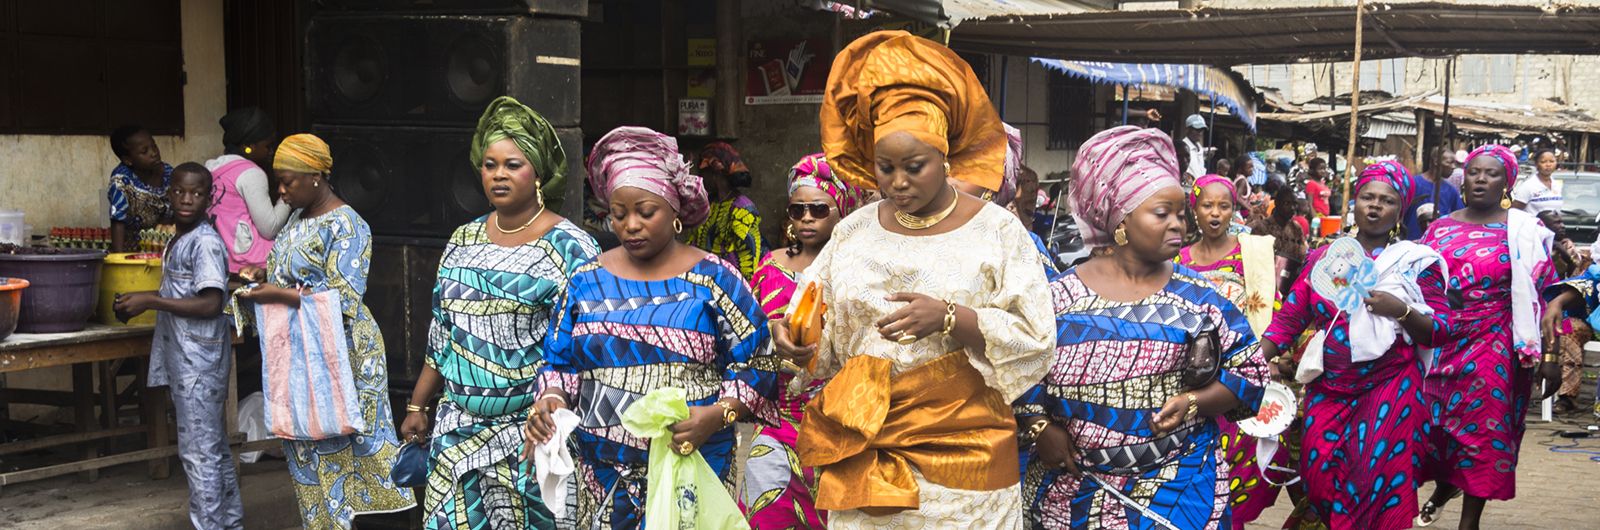 Benin. Festival mundial del Vud